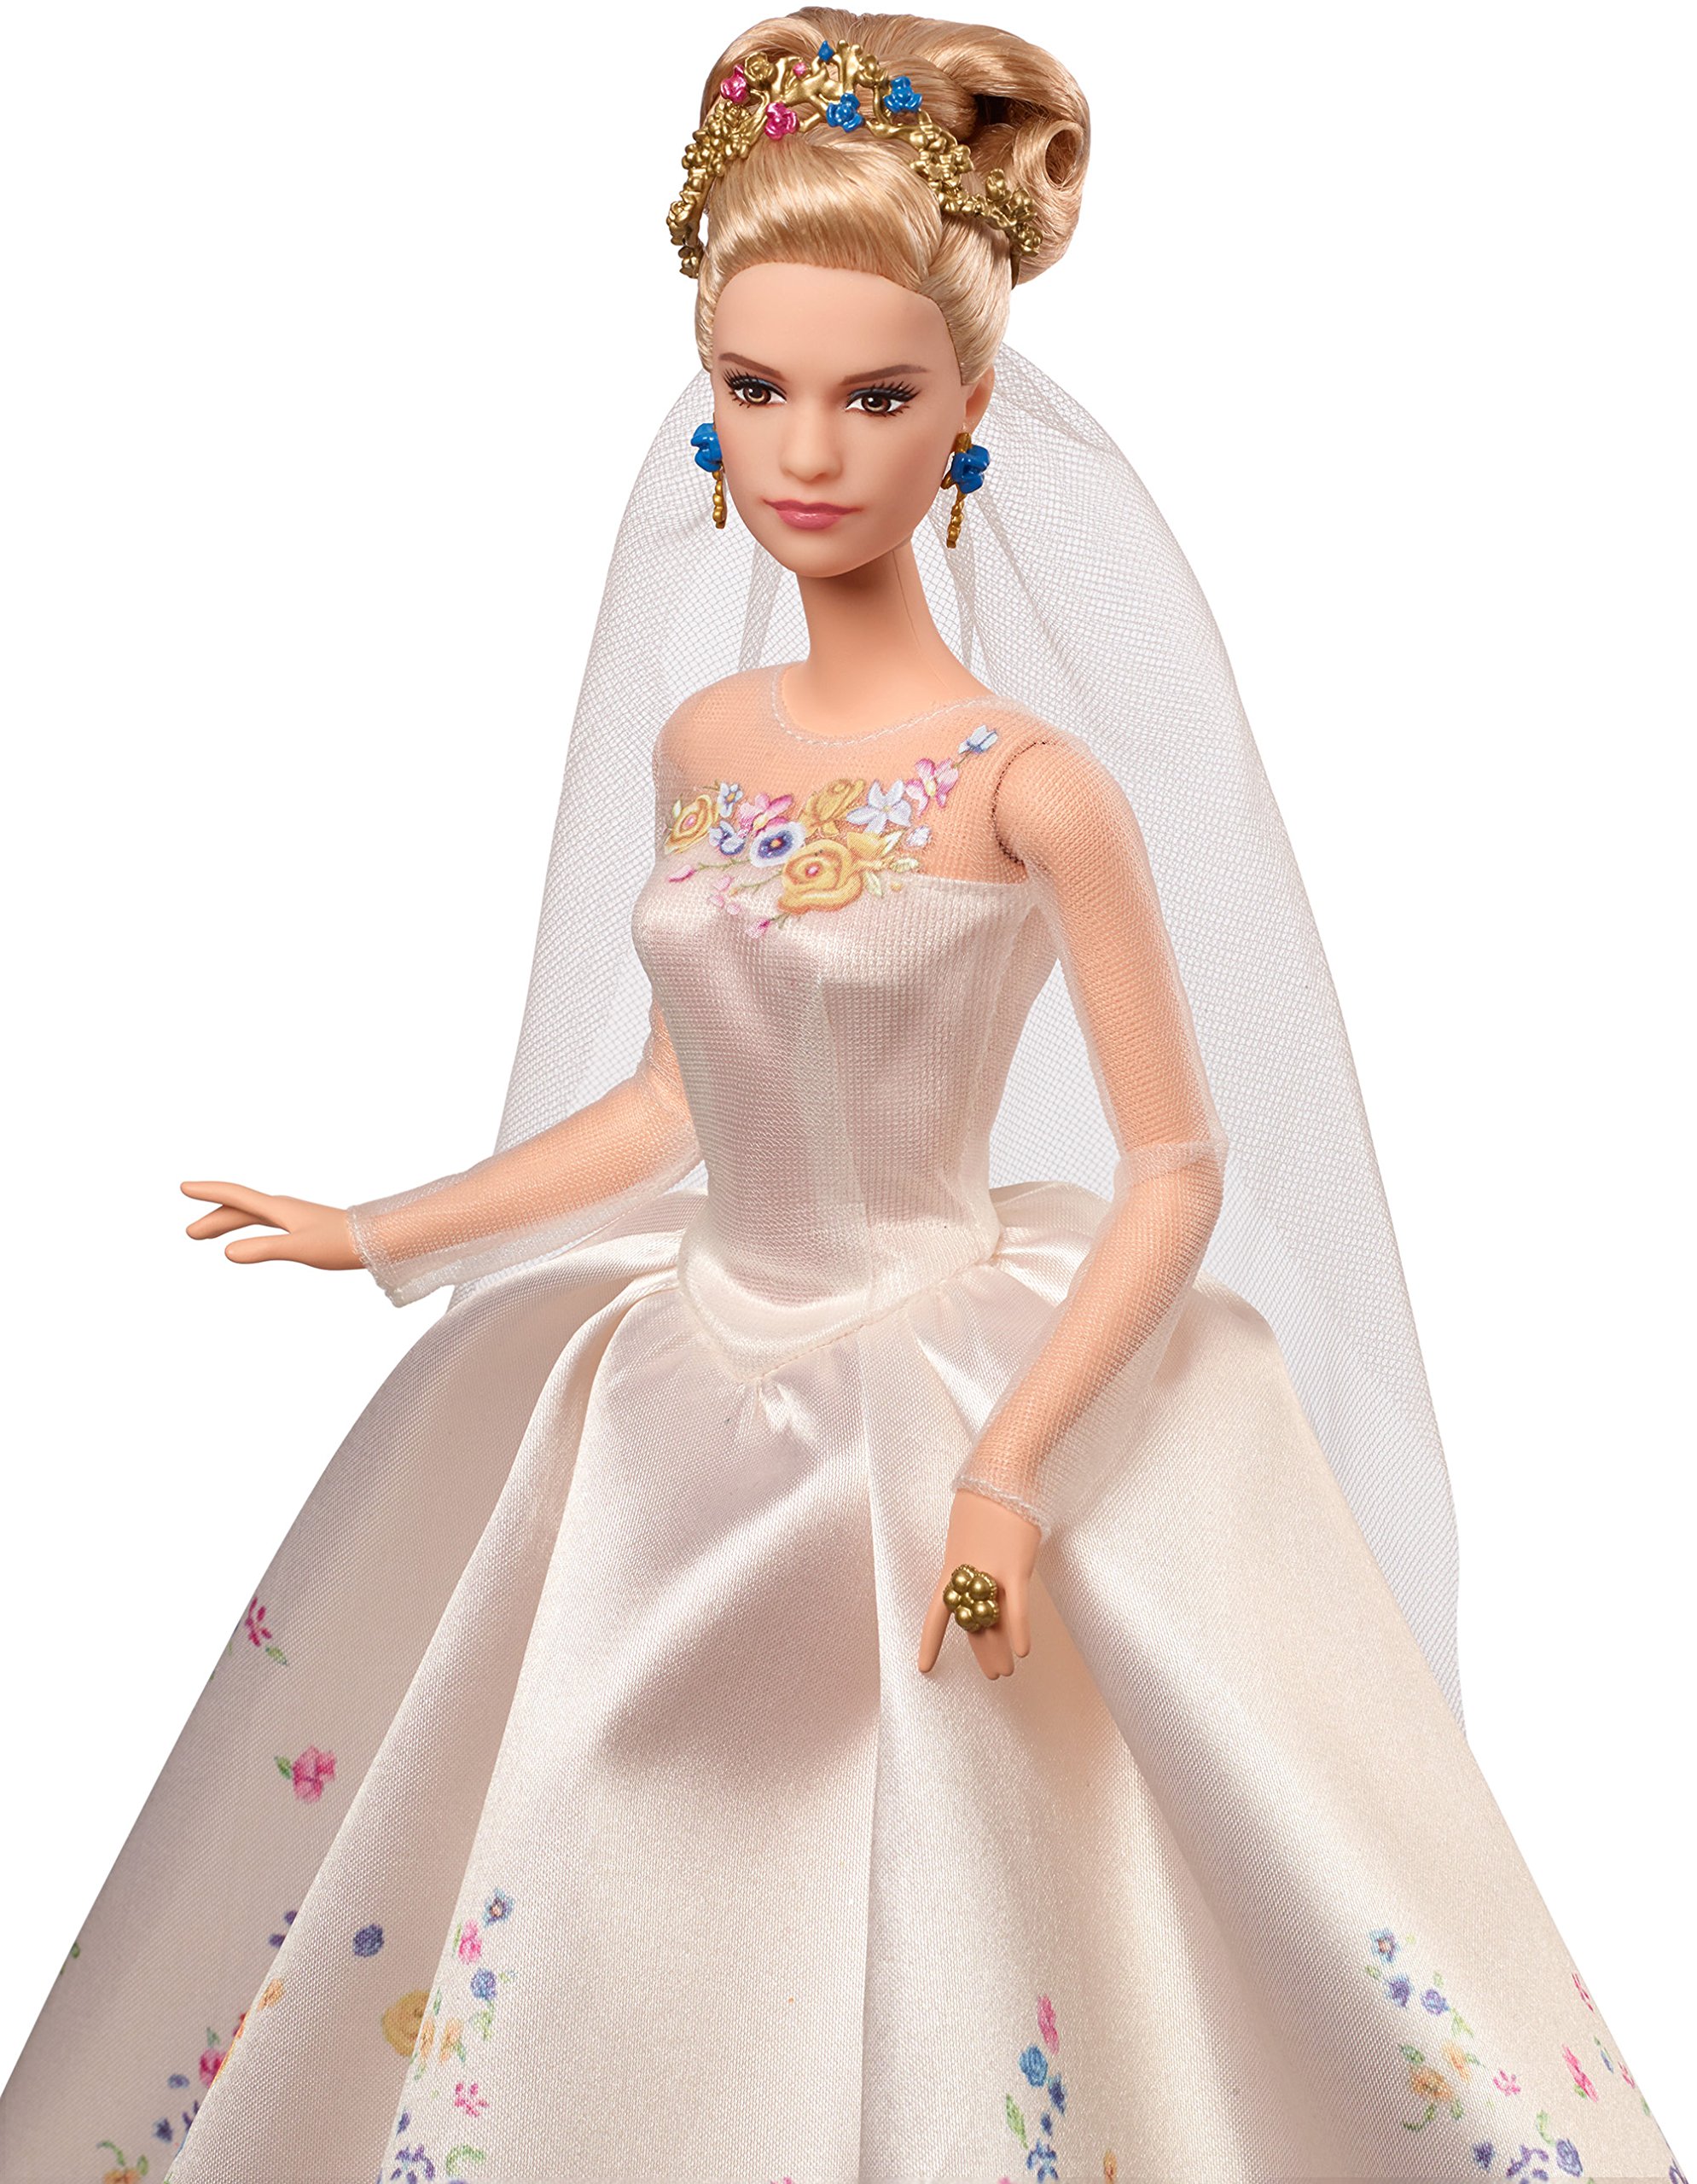 Mattel Disney Cinderella Wedding Day Cinderella Doll